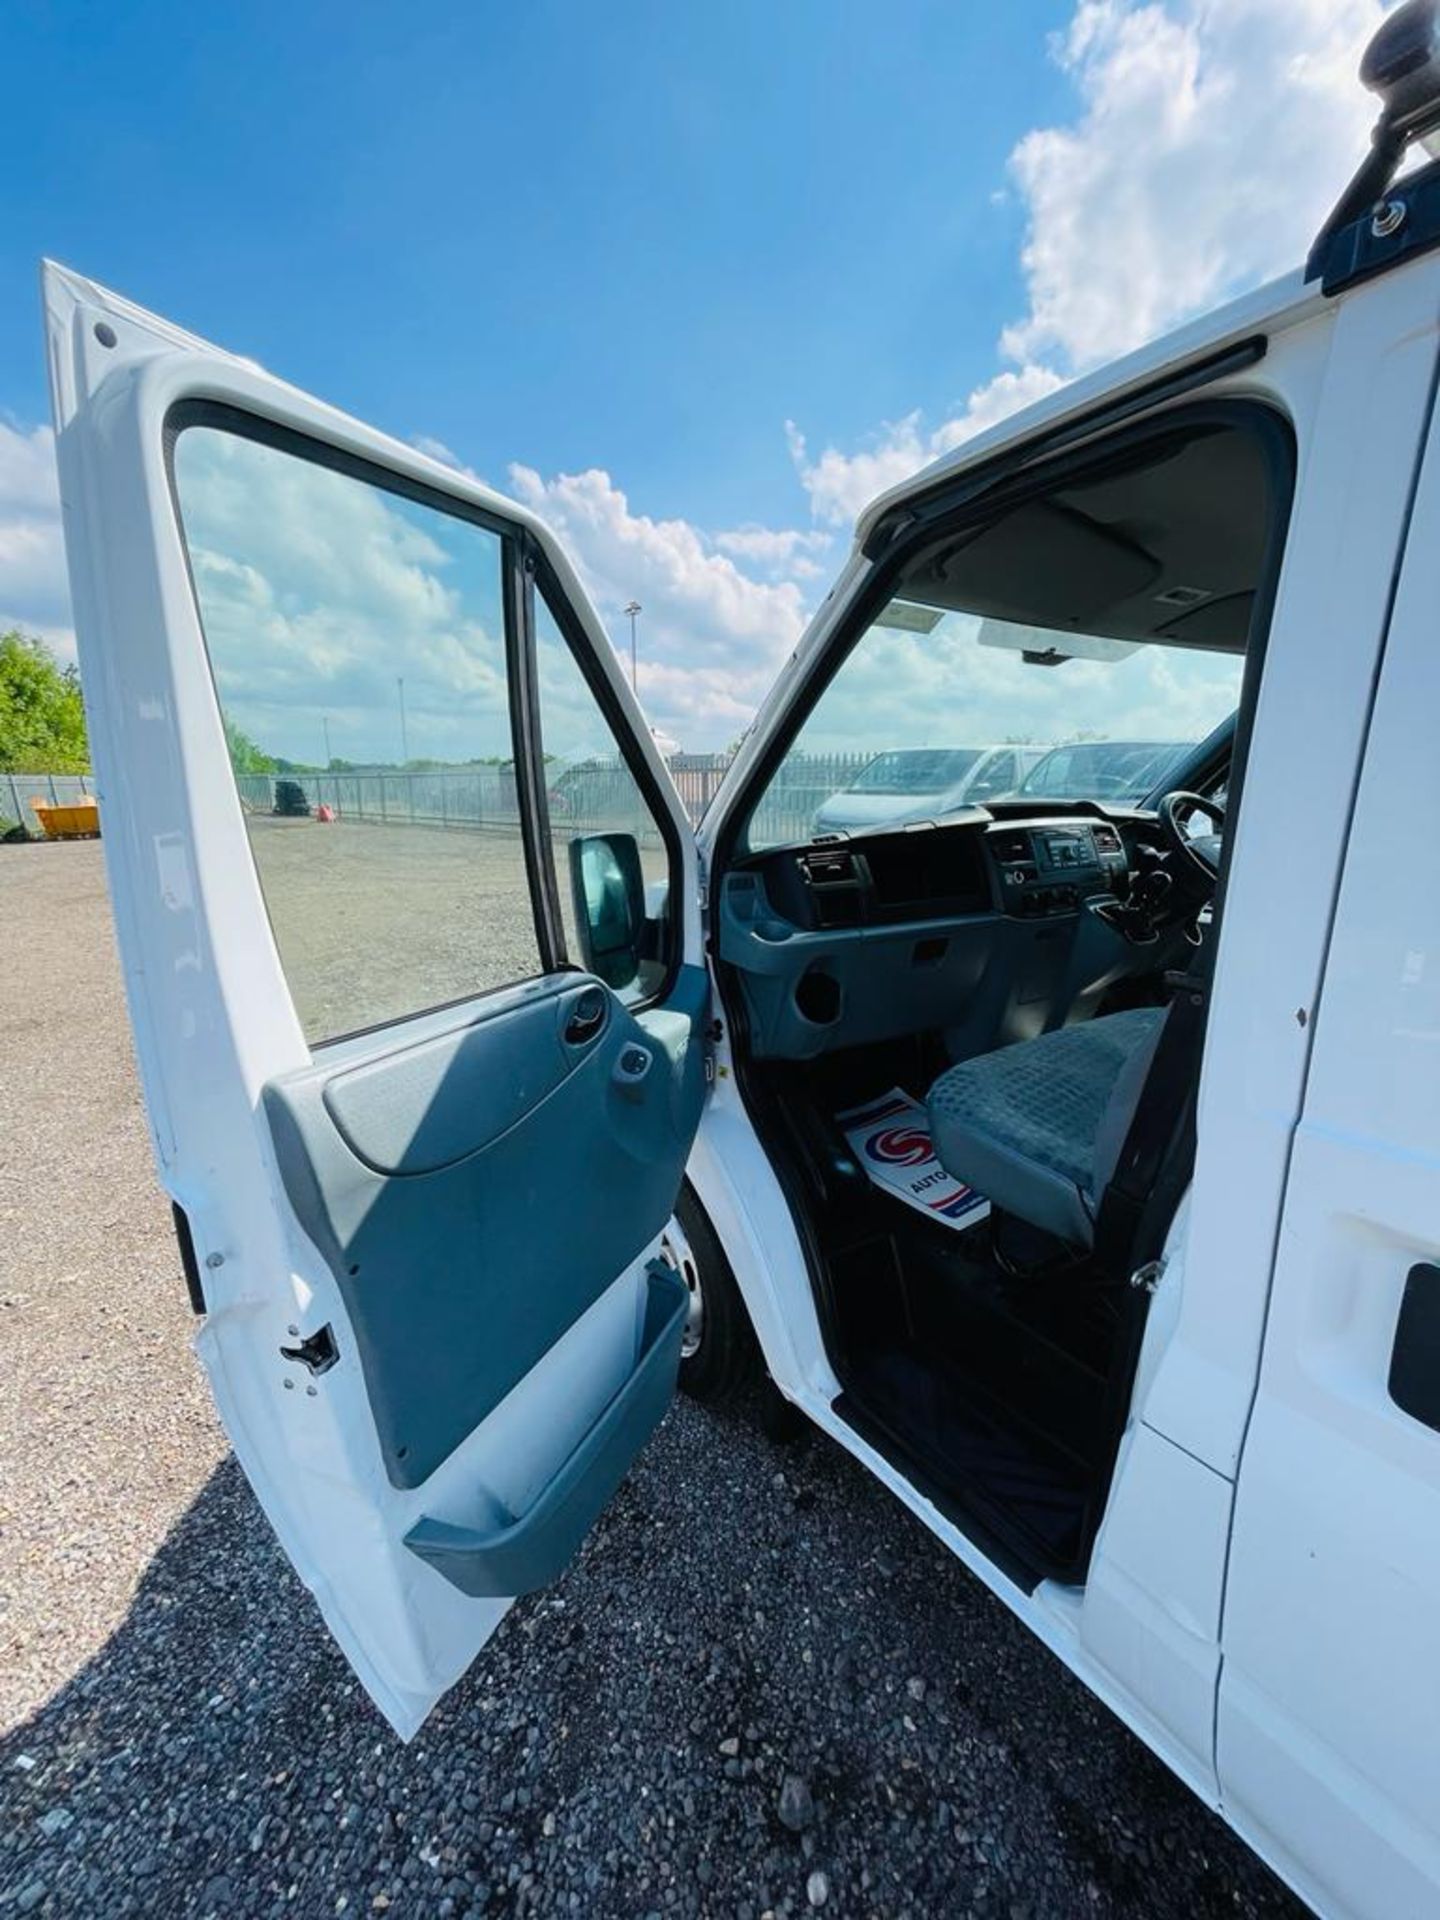 ** ON SALE ** Ford Transit 2.2 TDCI L1 H1 2012 ‘12 Reg’ Short wheel base - Panel Van - Image 22 of 24